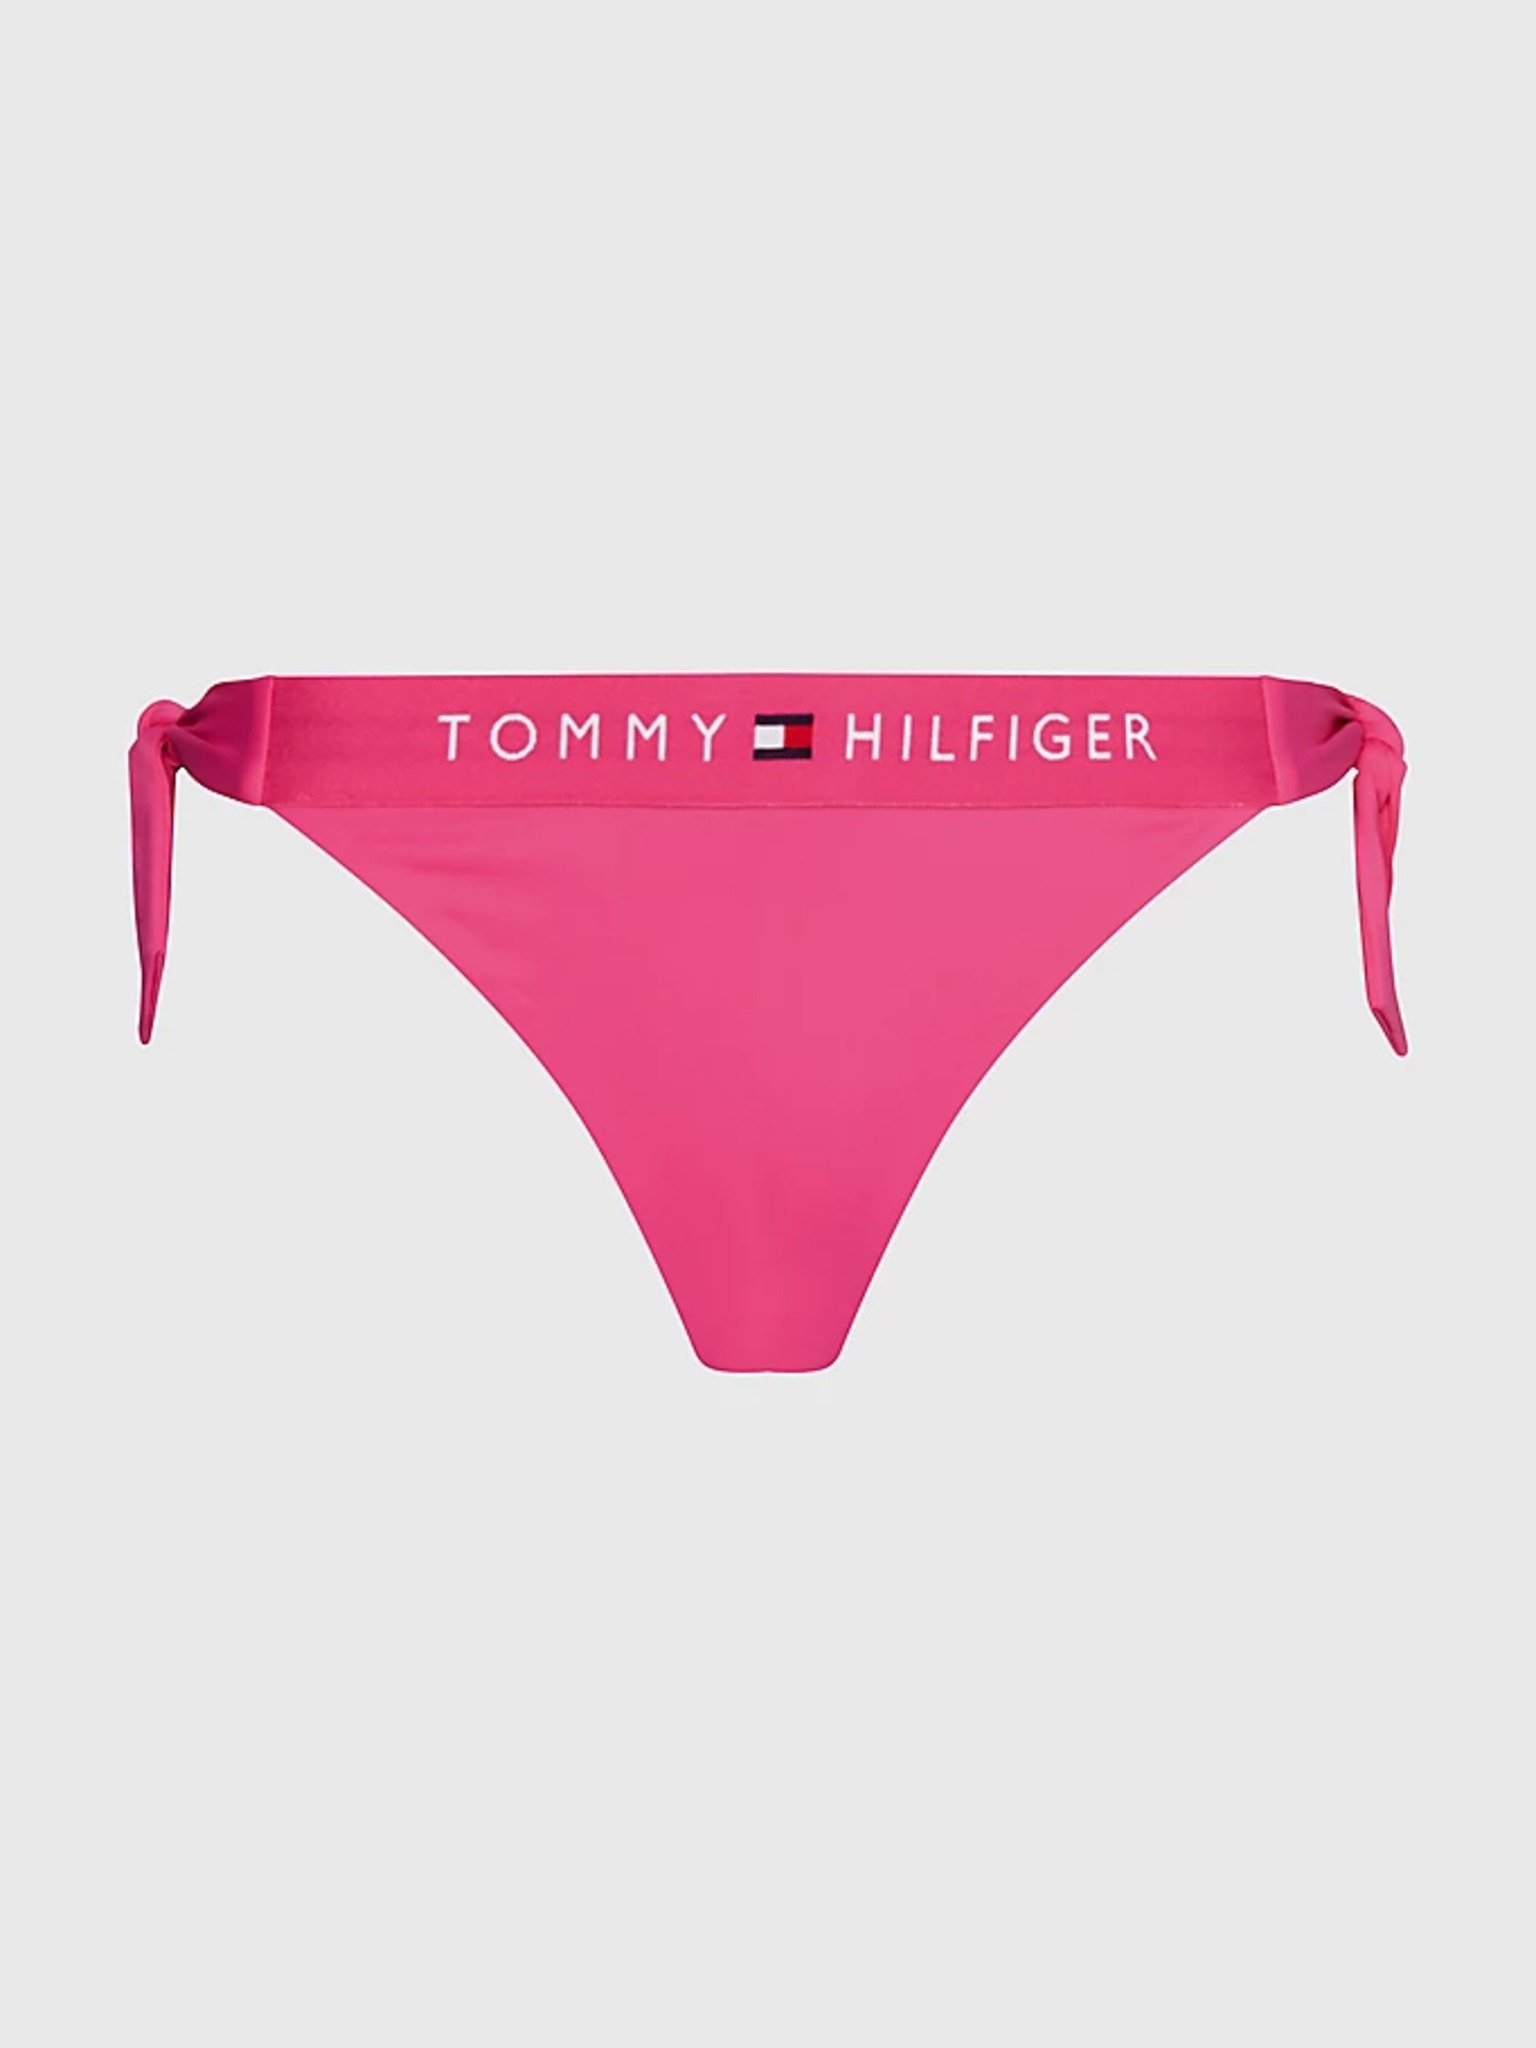 Tommy Hilfiger high waist bikini style brief in green